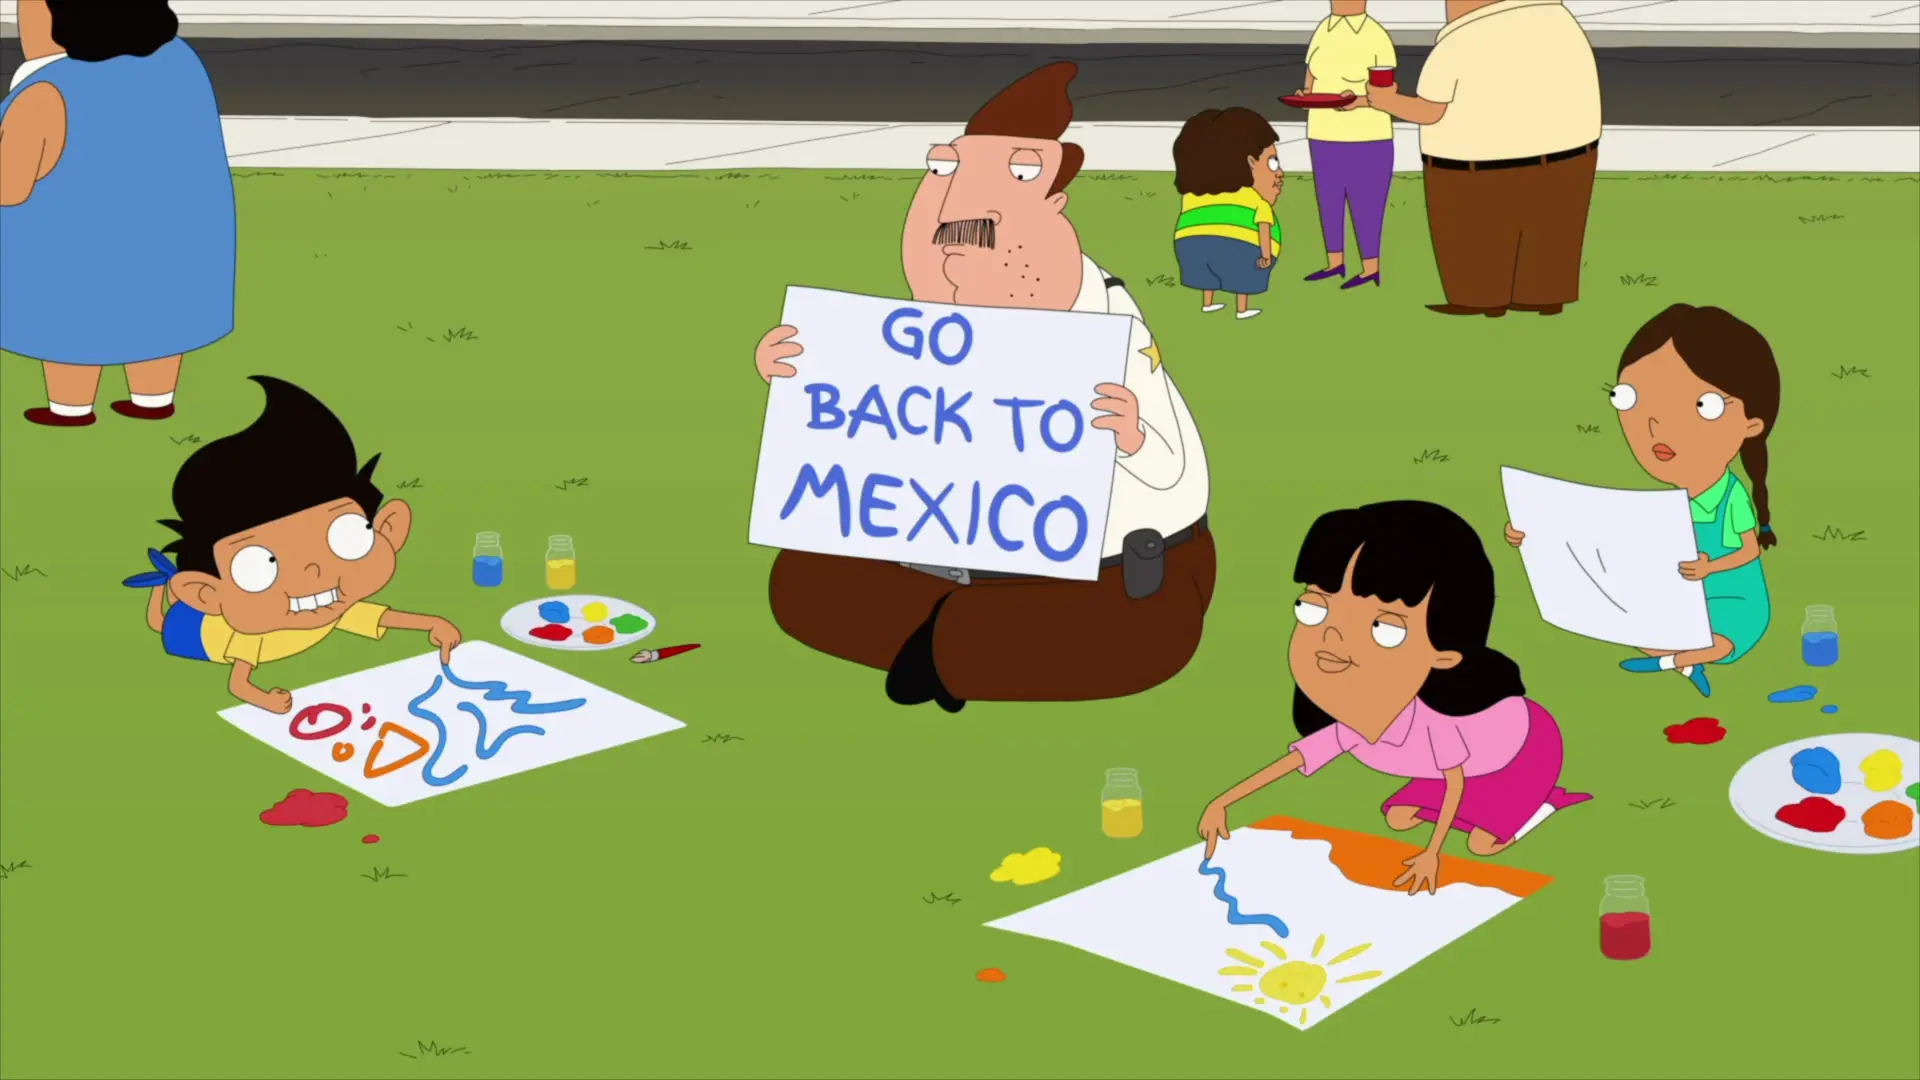 Go d backs. Go back to Mexico. Go back to Africa go back to Mexico. Go back.